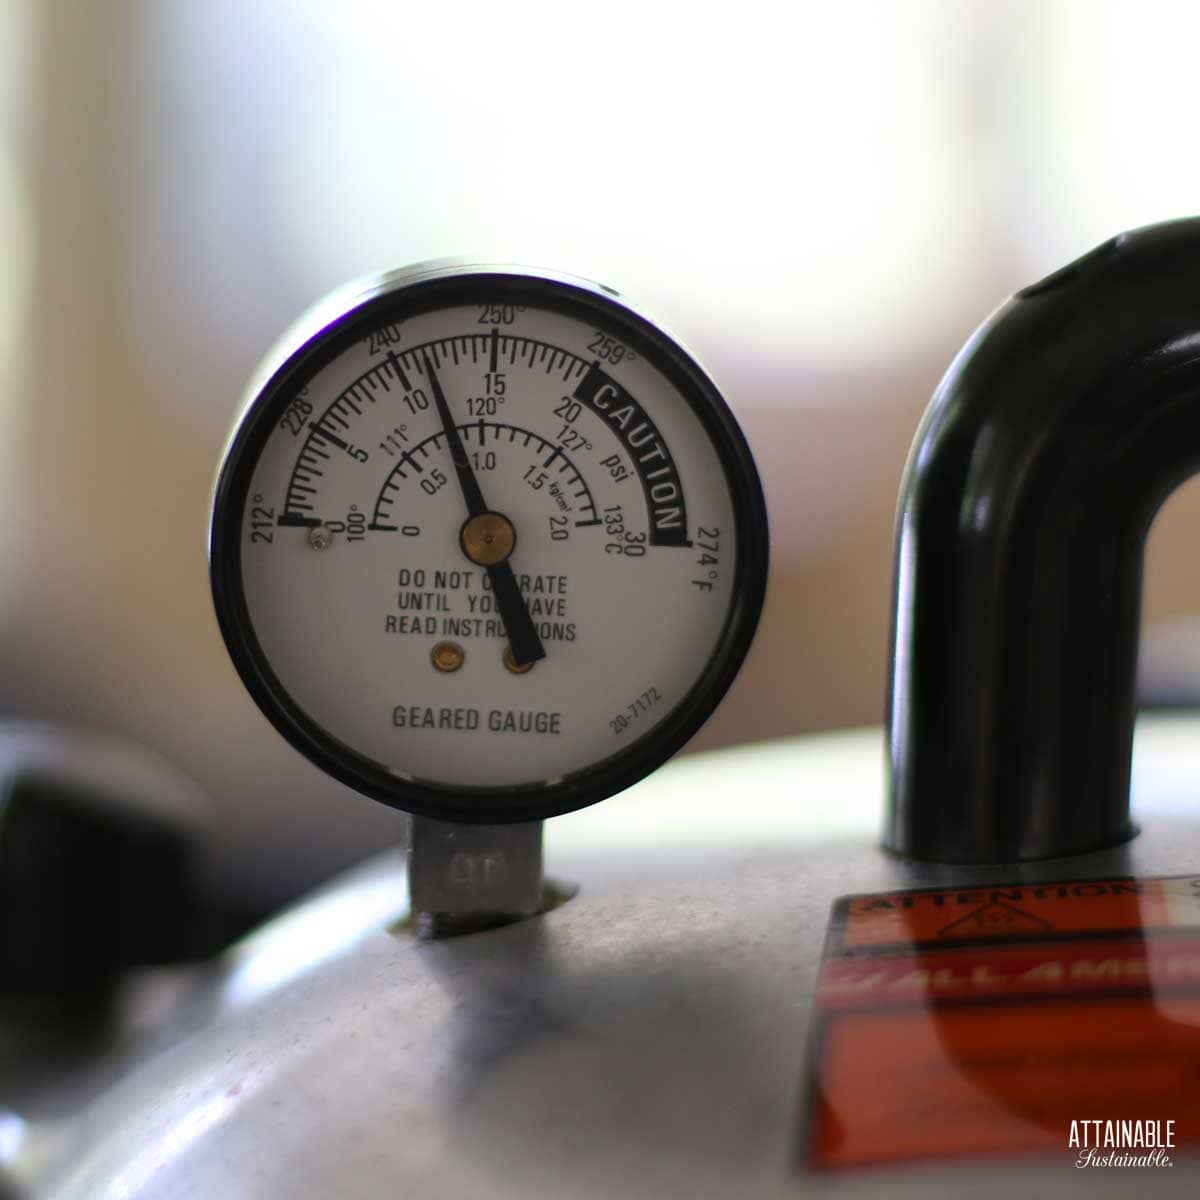 gauge on a pressure canner.